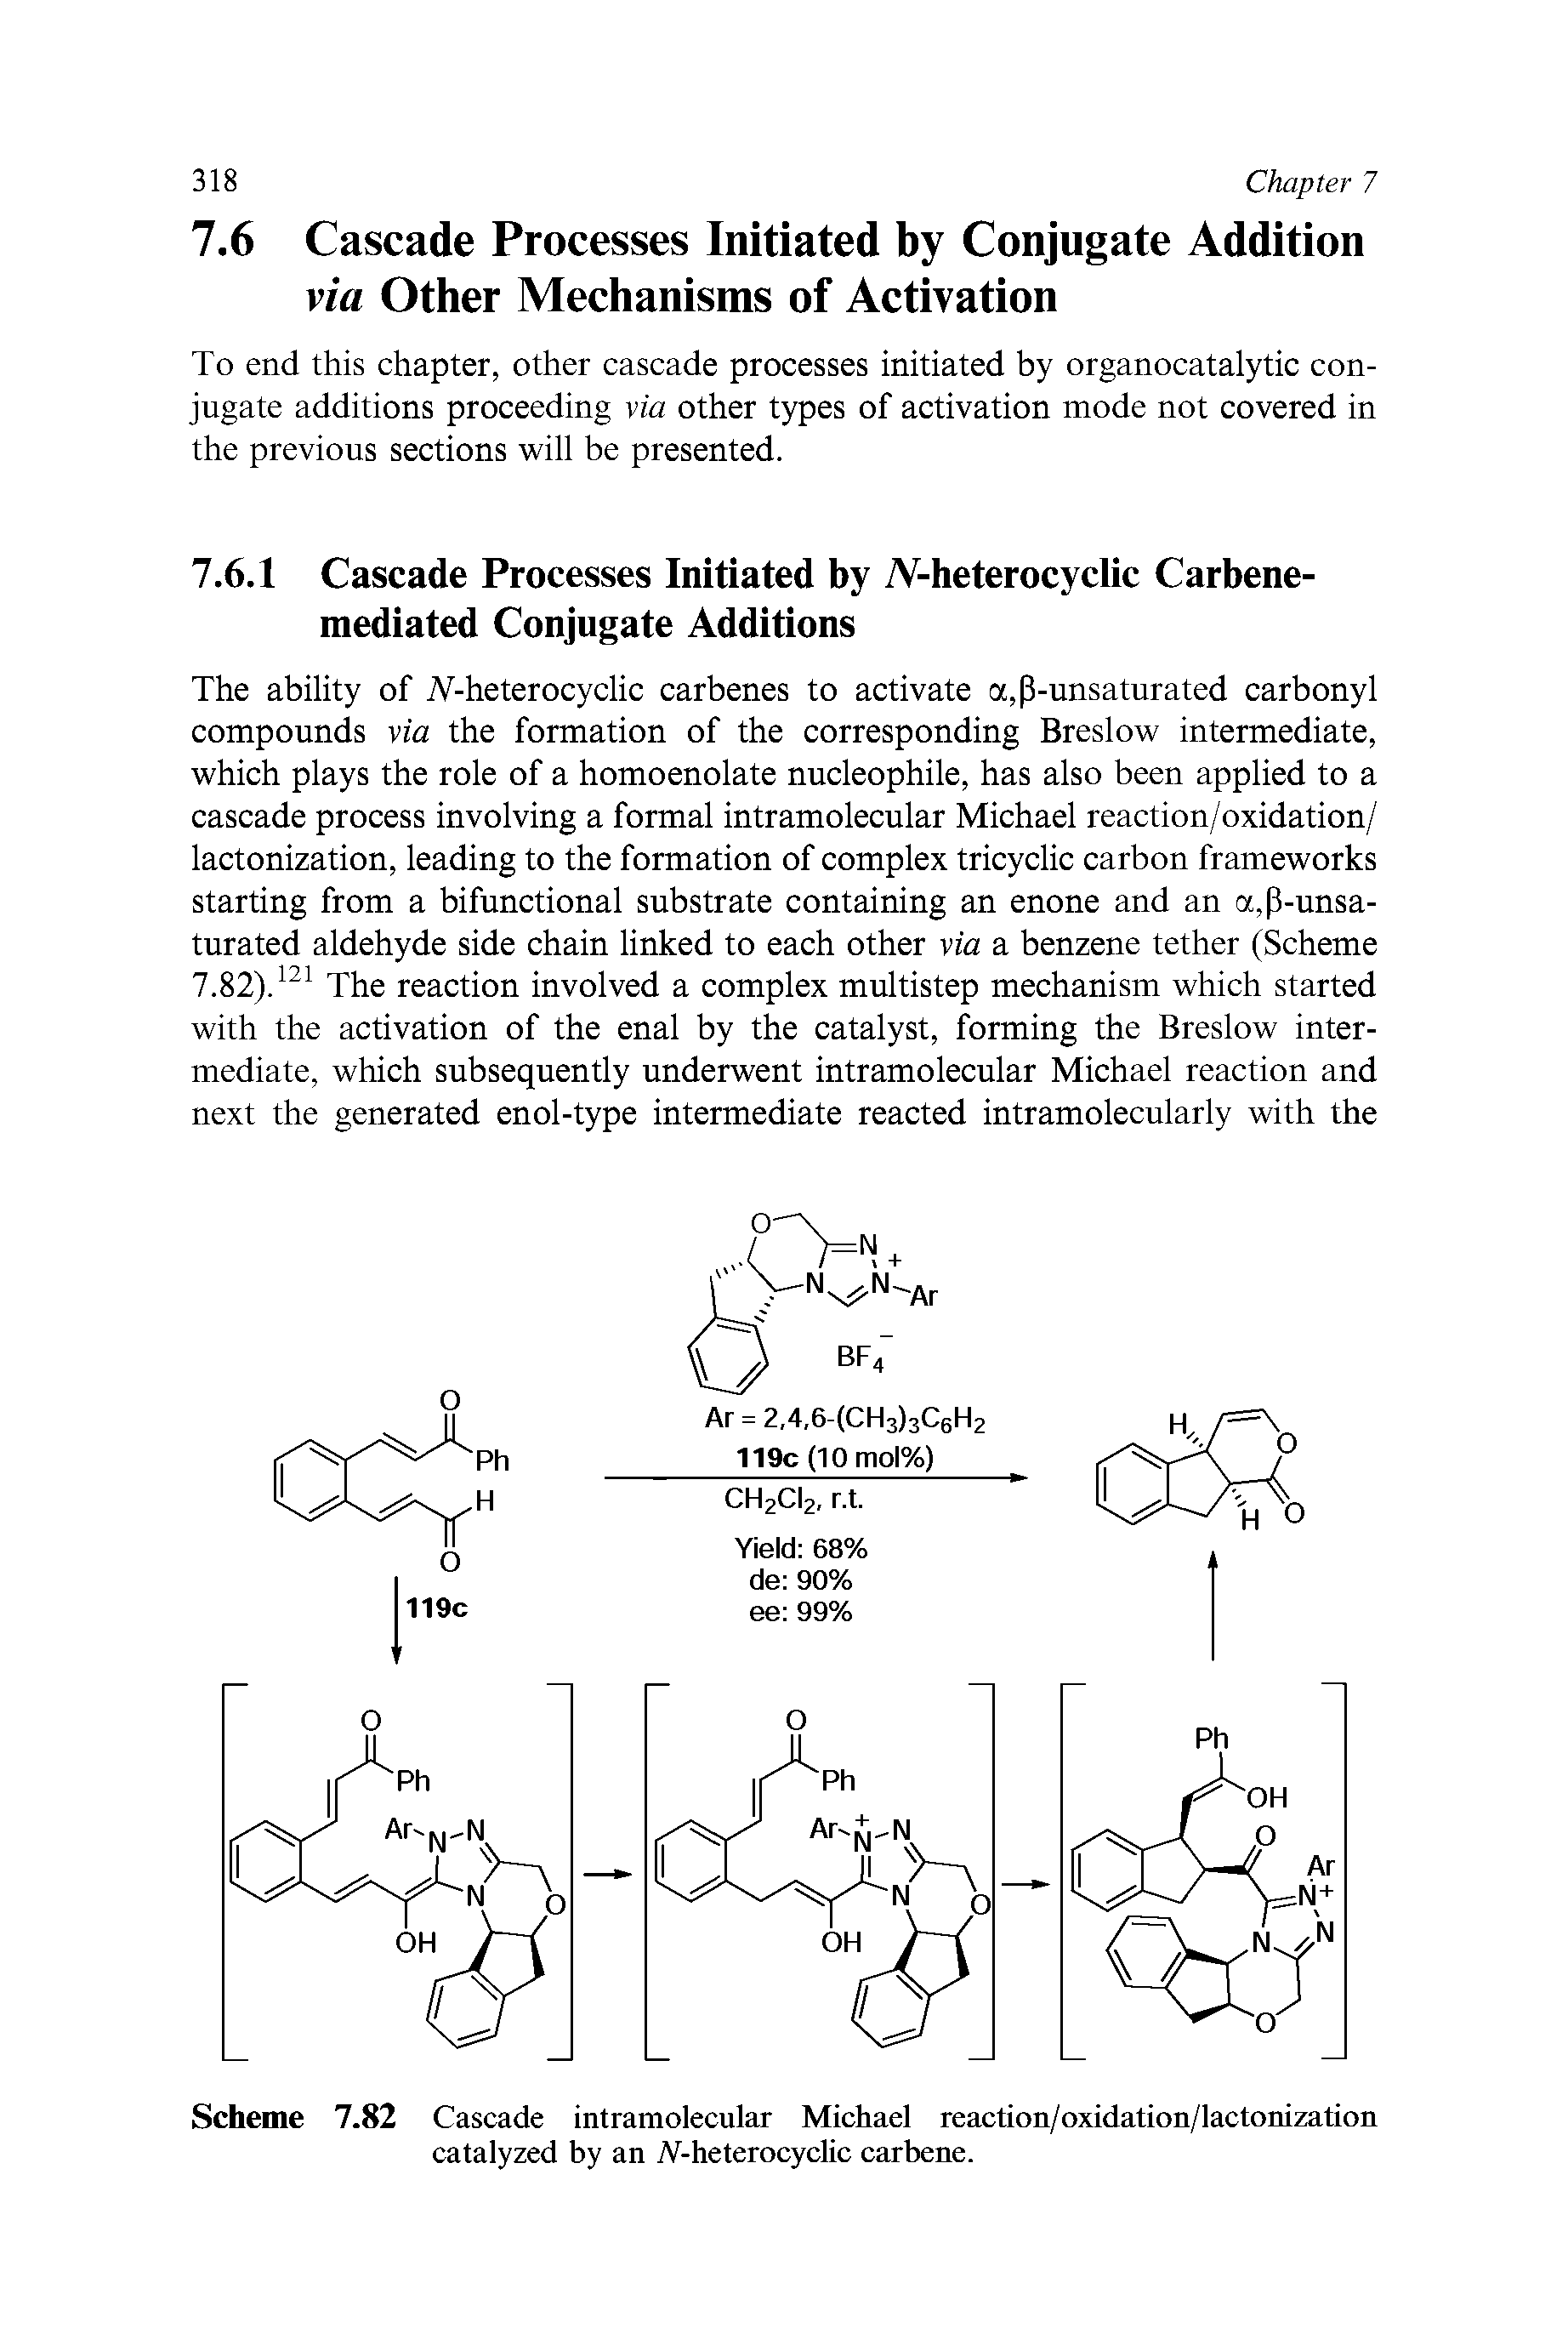 Scheme 7.82 Cascade intramolecular Michael reaction/oxidation/lactonization catalyzed by an iV-heterocyclic carbene.